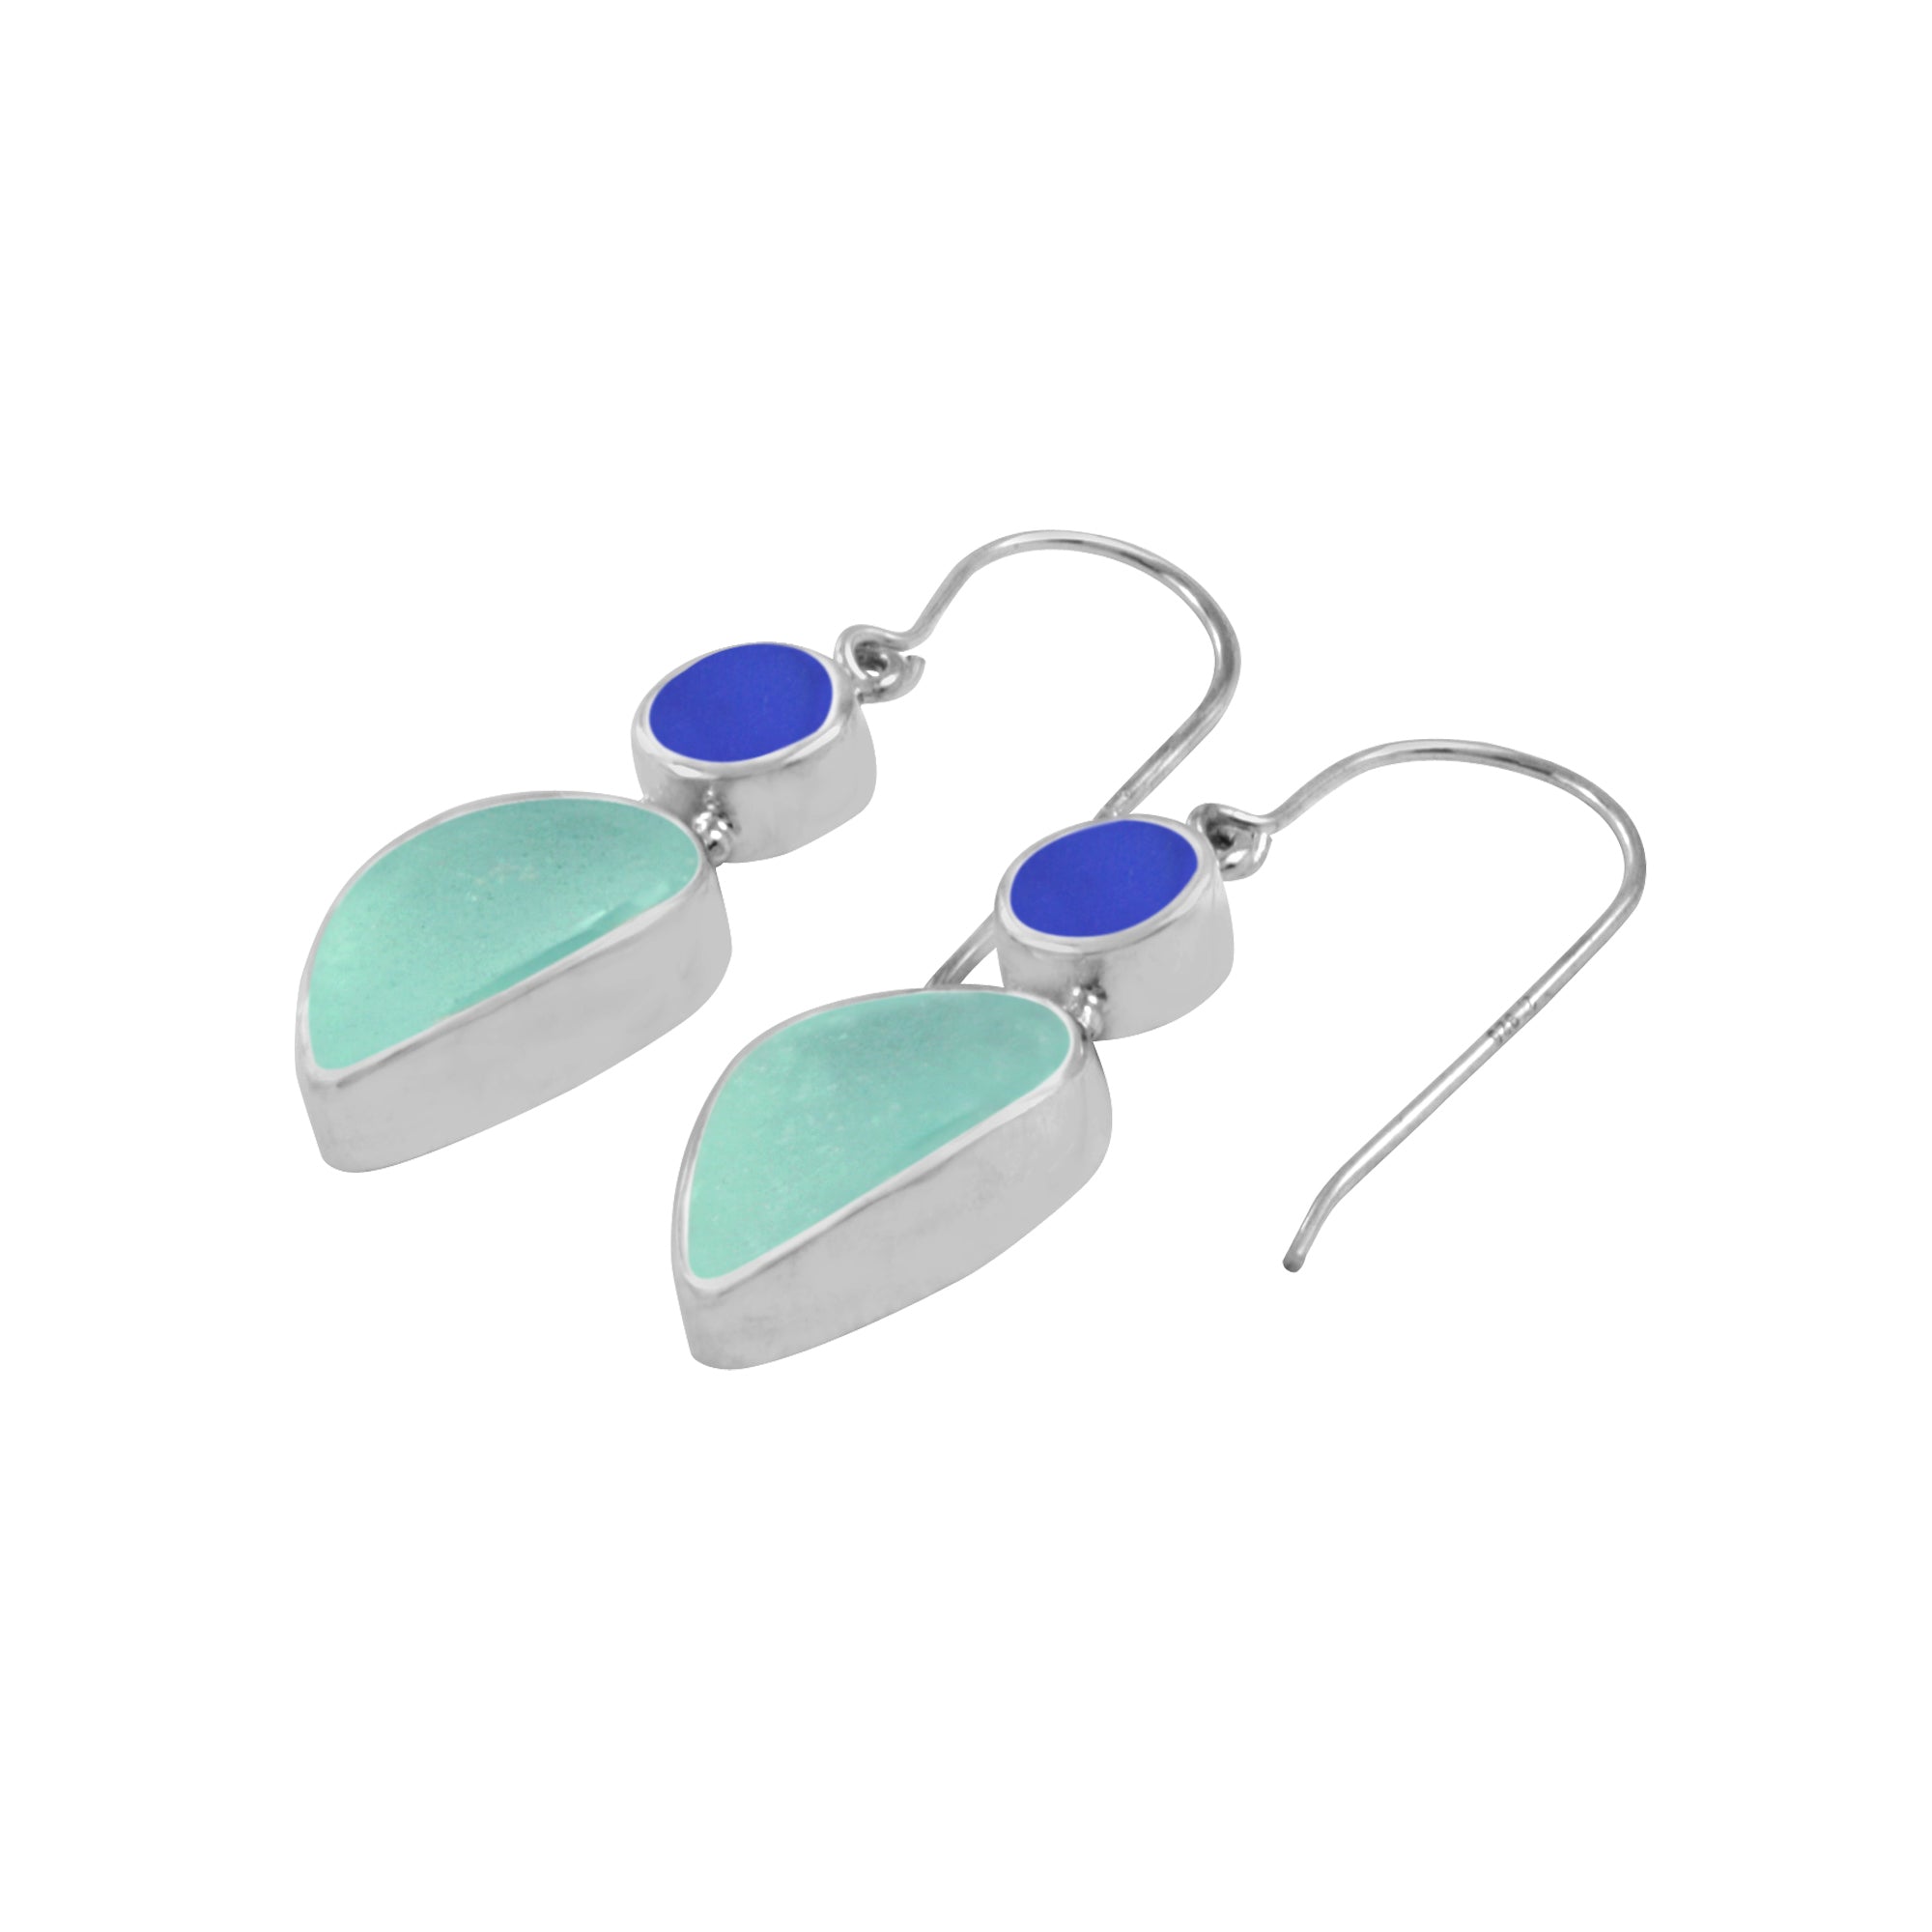 Stunning Aqua and Blue Sea Glass earring